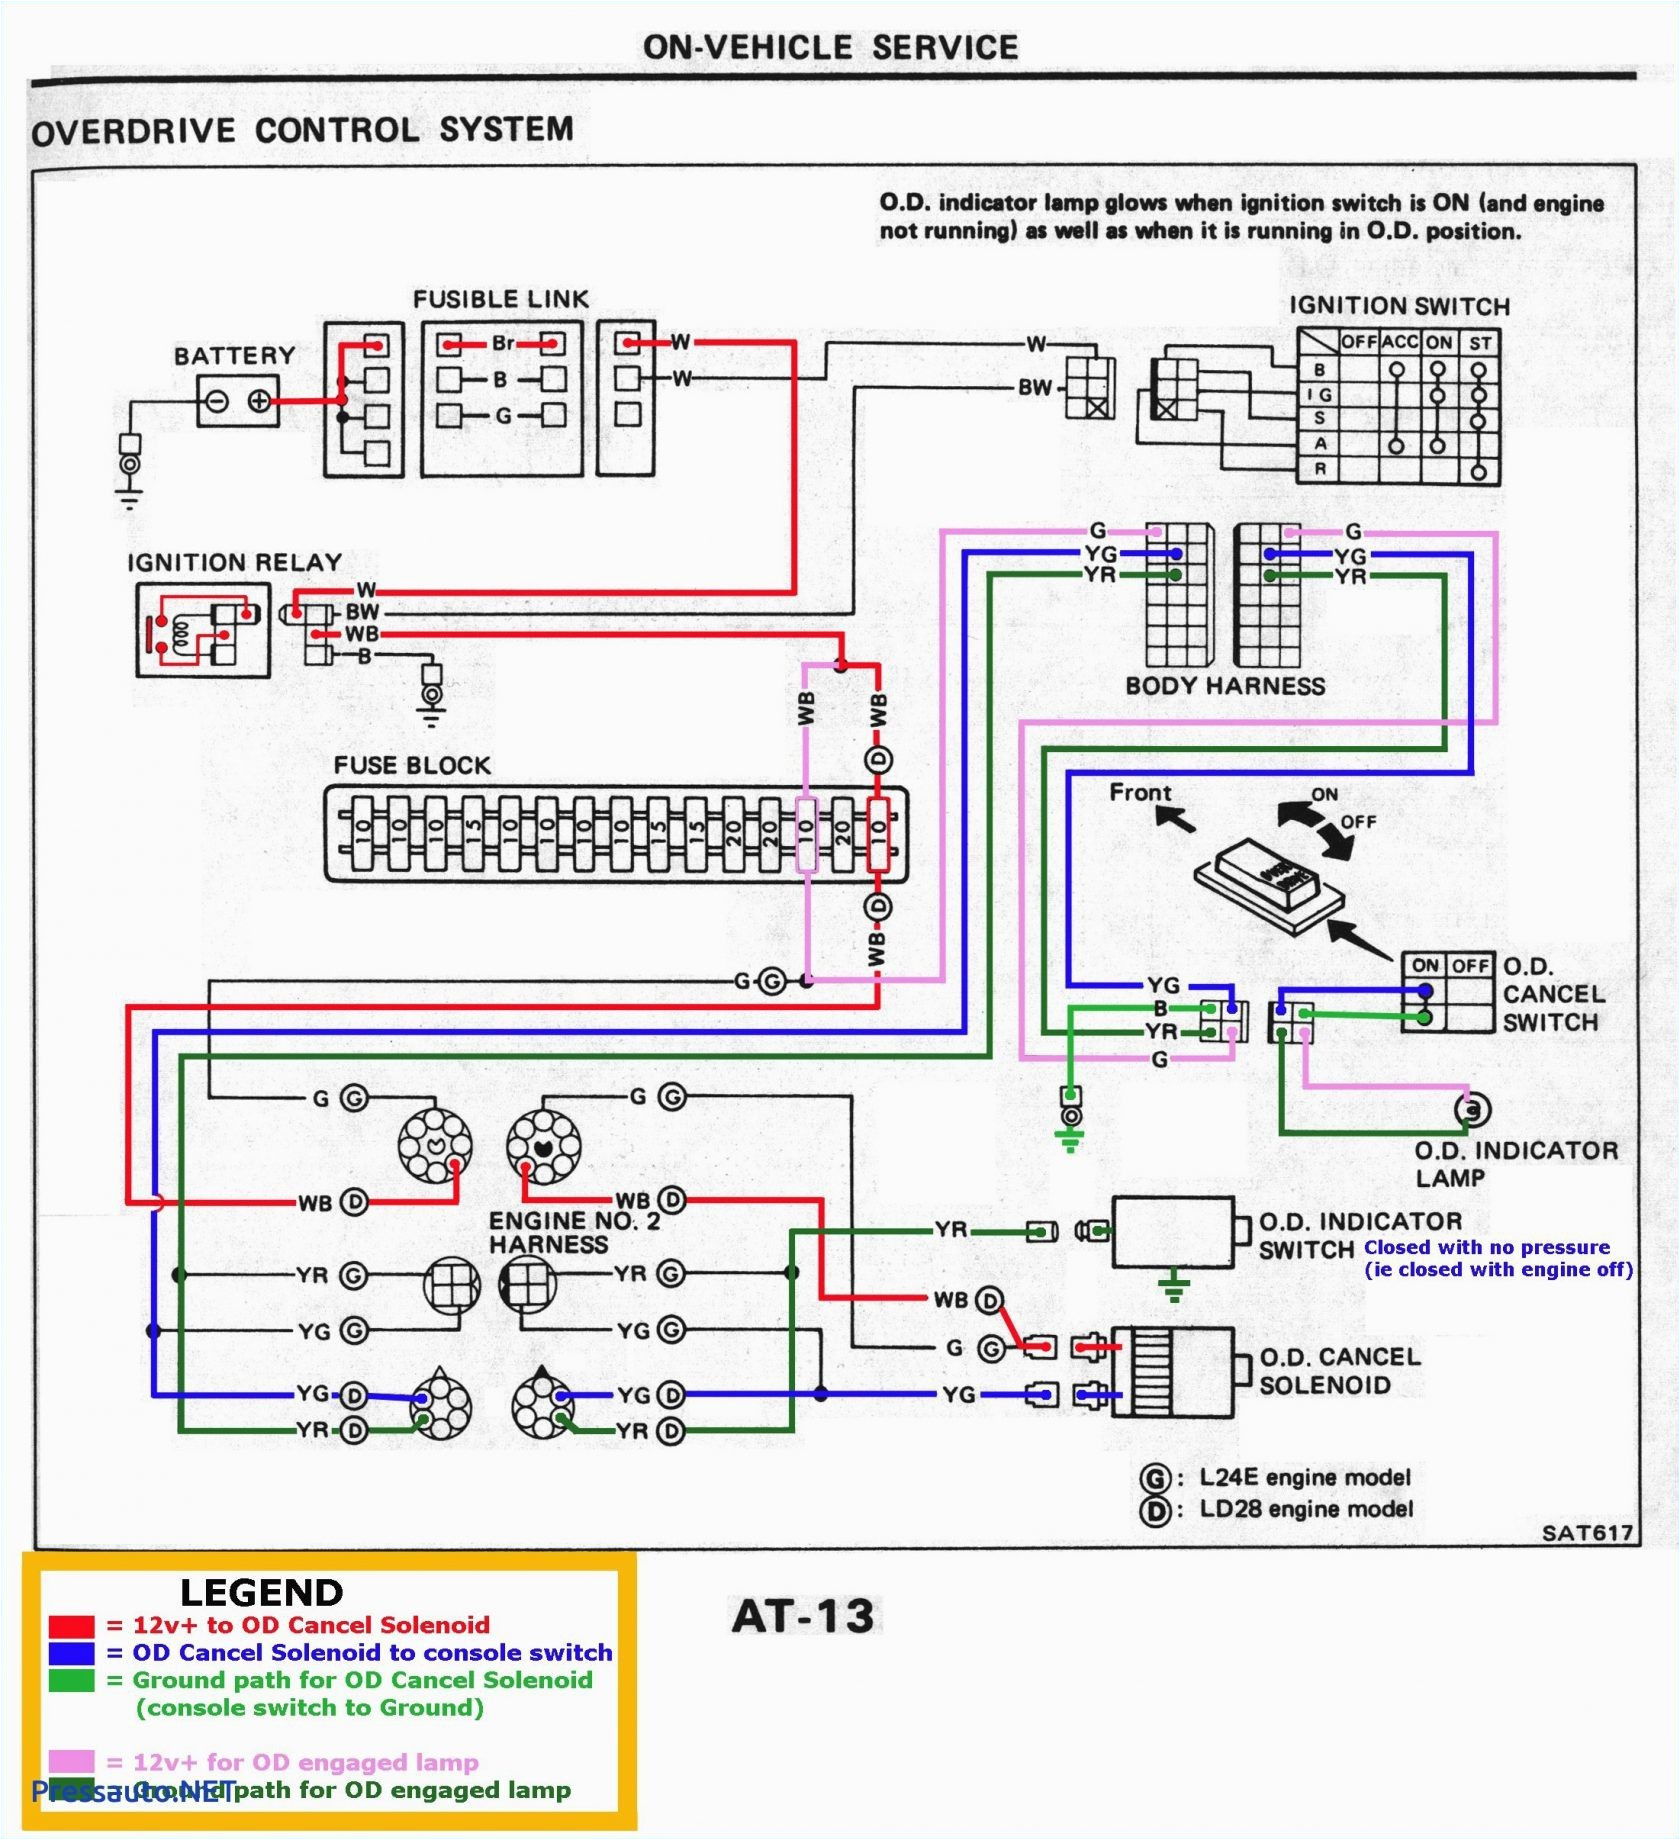 5404 viper car alarm systems wiring diagrams wiring diagrams second 5404 viper car alarm systems wiring diagrams